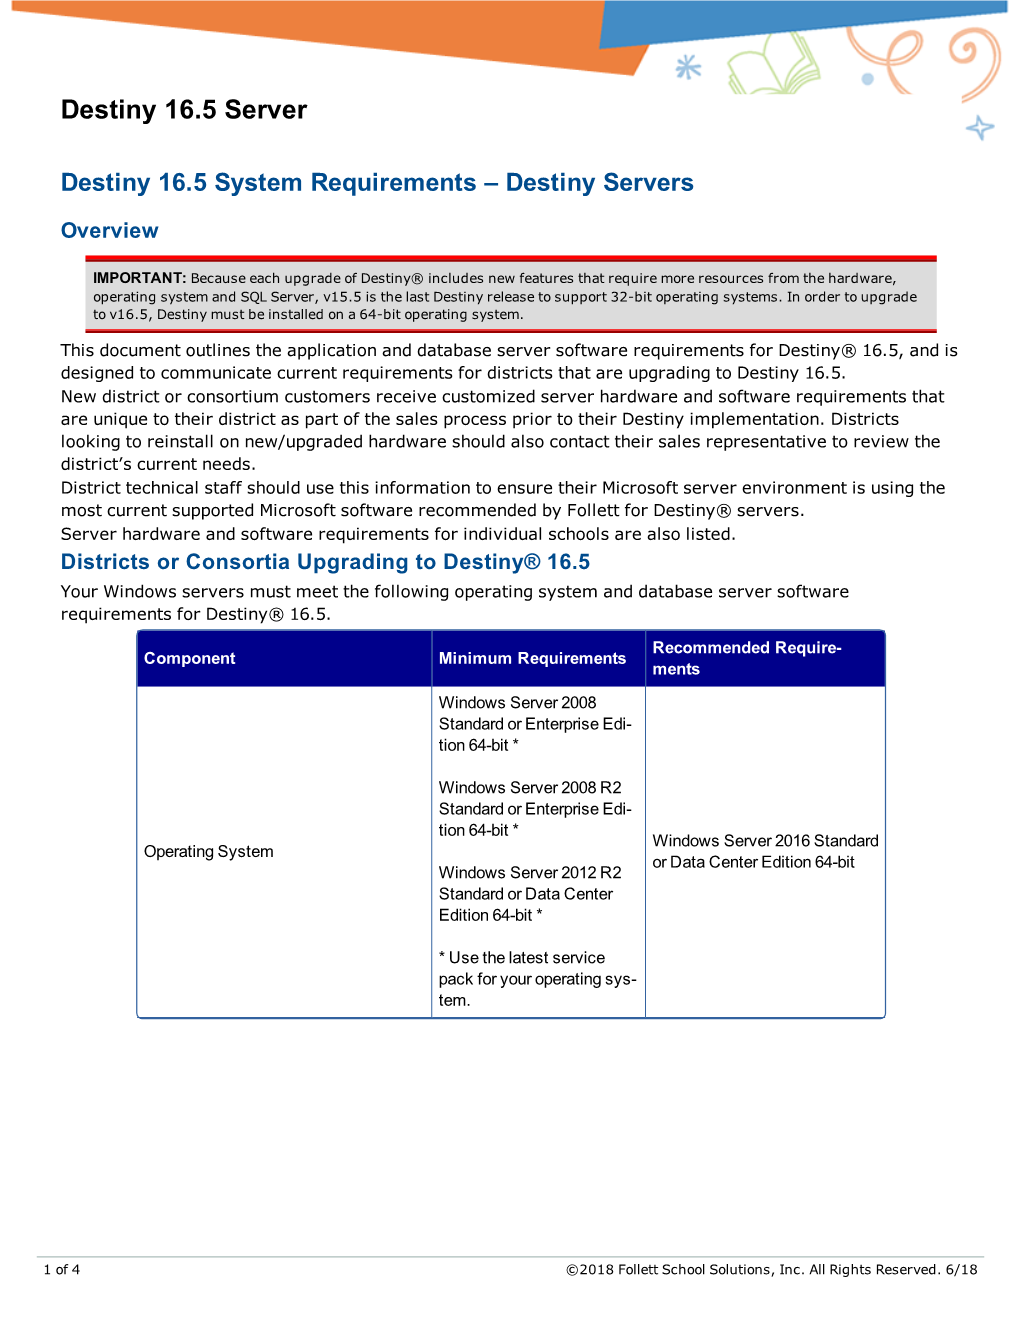 Destiny 16.5 System Requirements—Destiny Servers